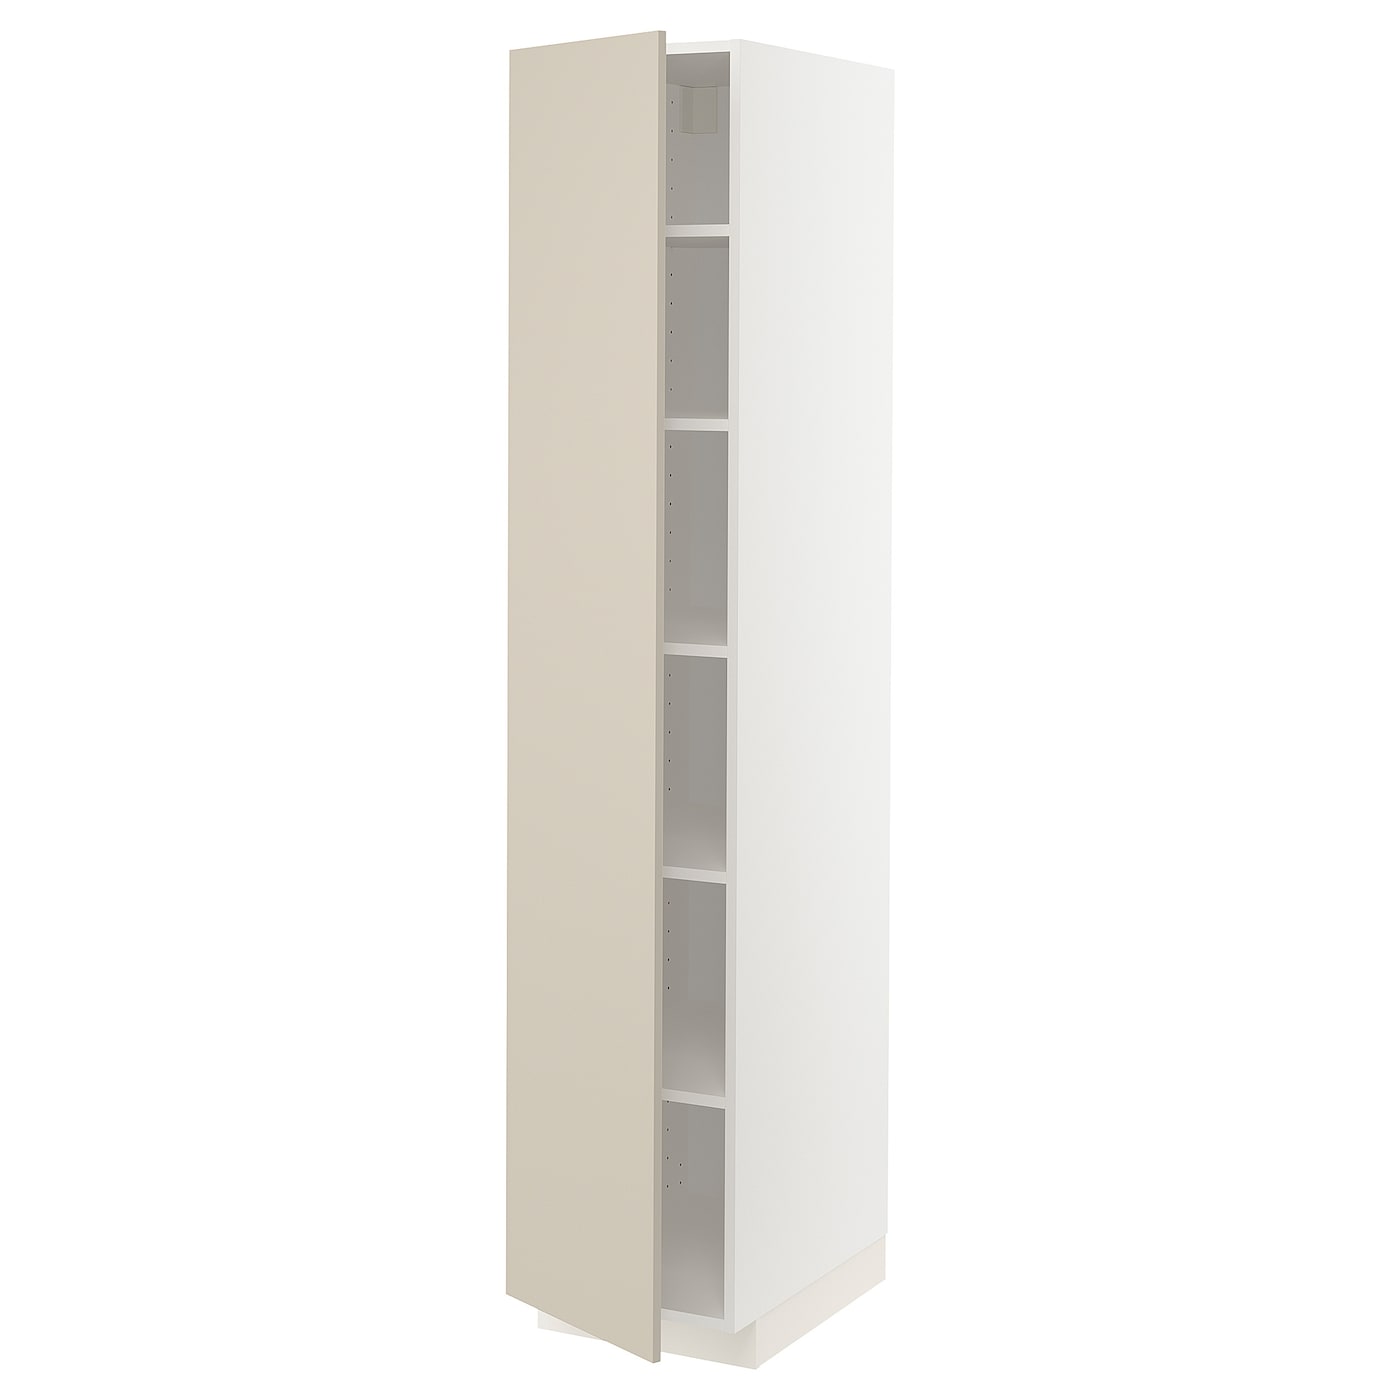 Высокий кухонный шкаф с полками - IKEA METOD/МЕТОД ИКЕА, 200х60х40 см, белый/бежевый